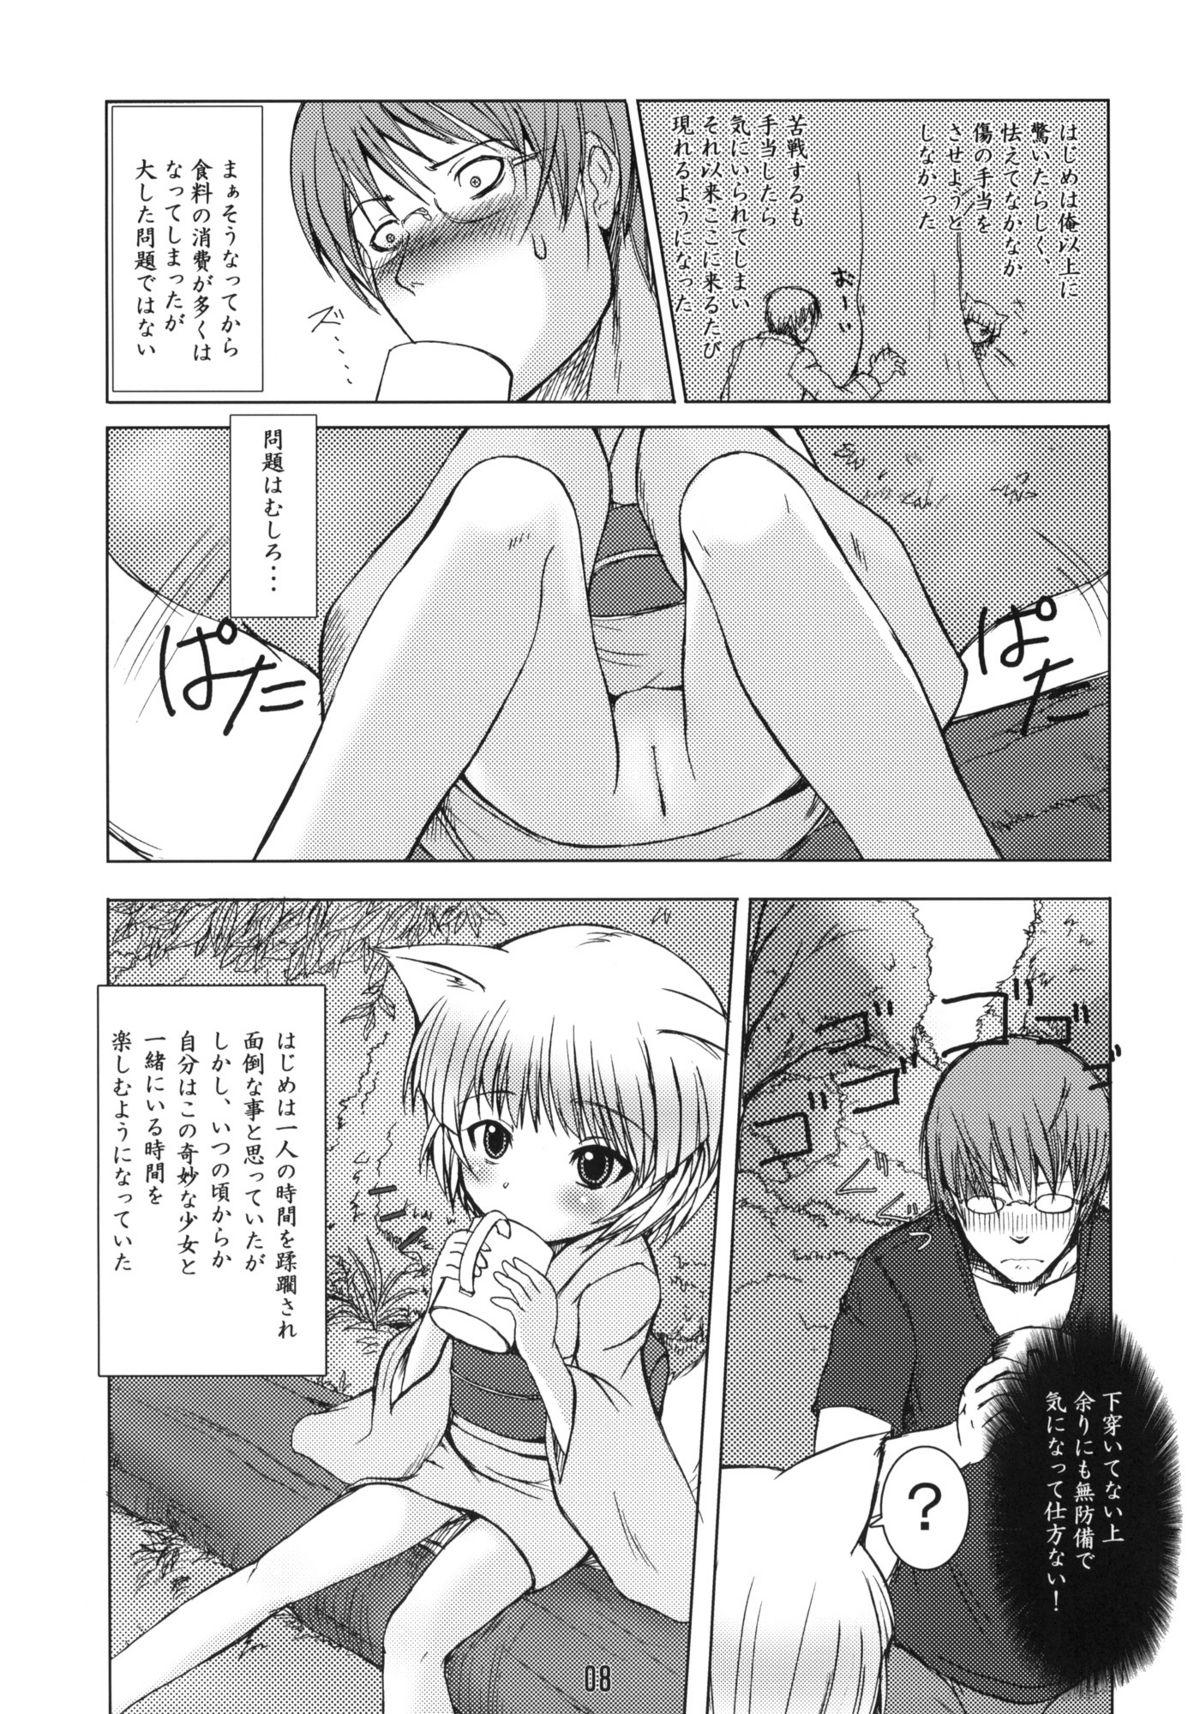 18 Year Old Byakko no Mori Blowjob - Page 7